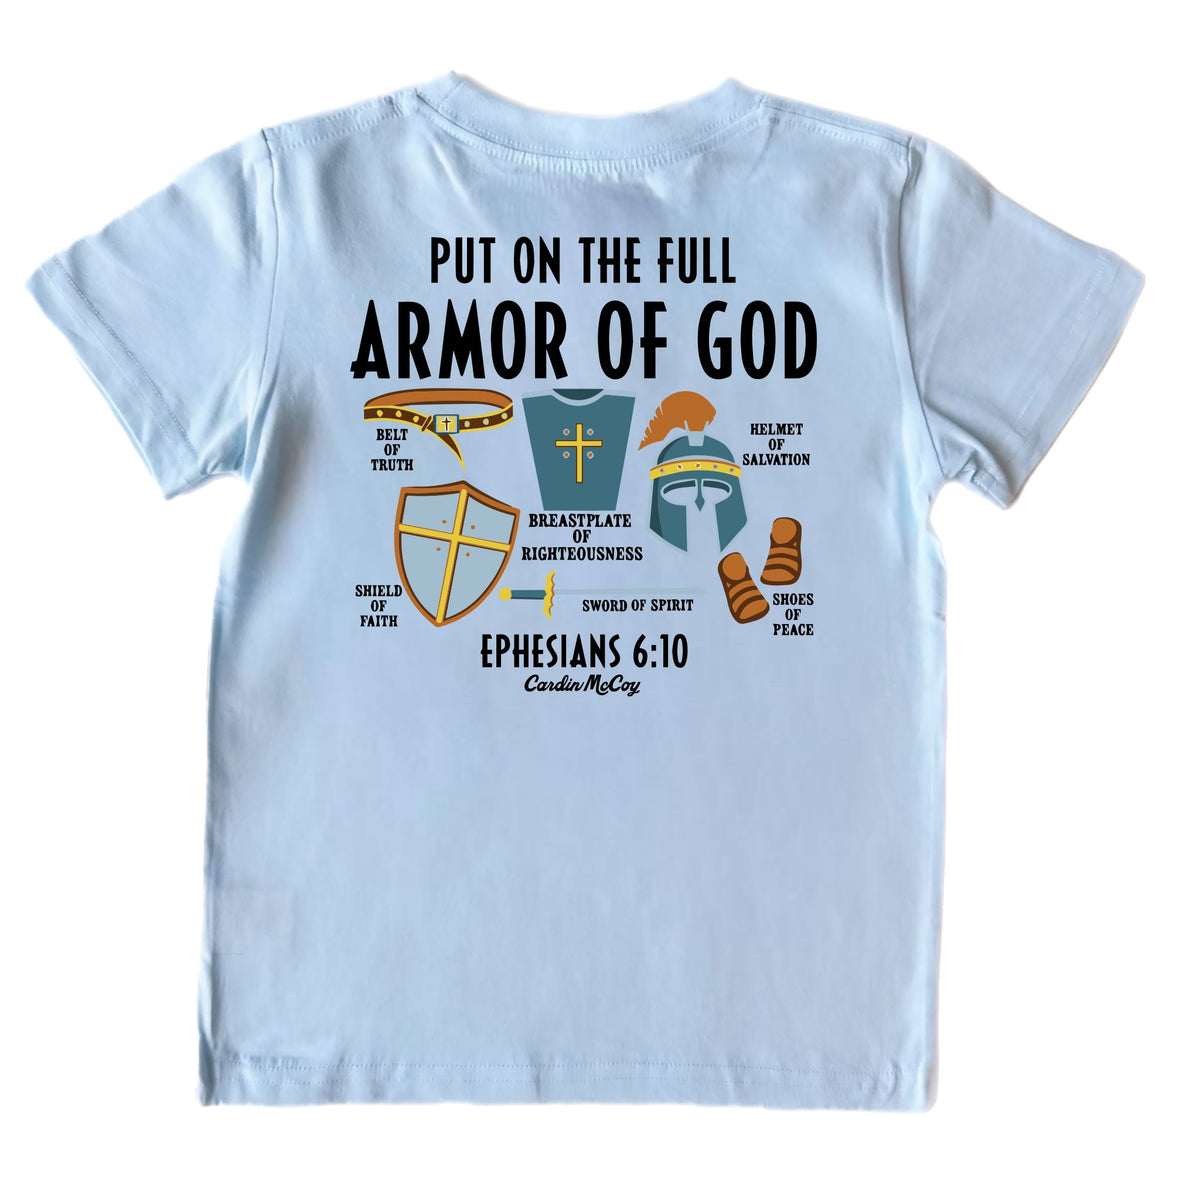 Kids' Armor of God Short-Sleeve Tee Short Sleeve T-Shirt Cardin McCoy Cool Blue XXS (2/3) Pocket